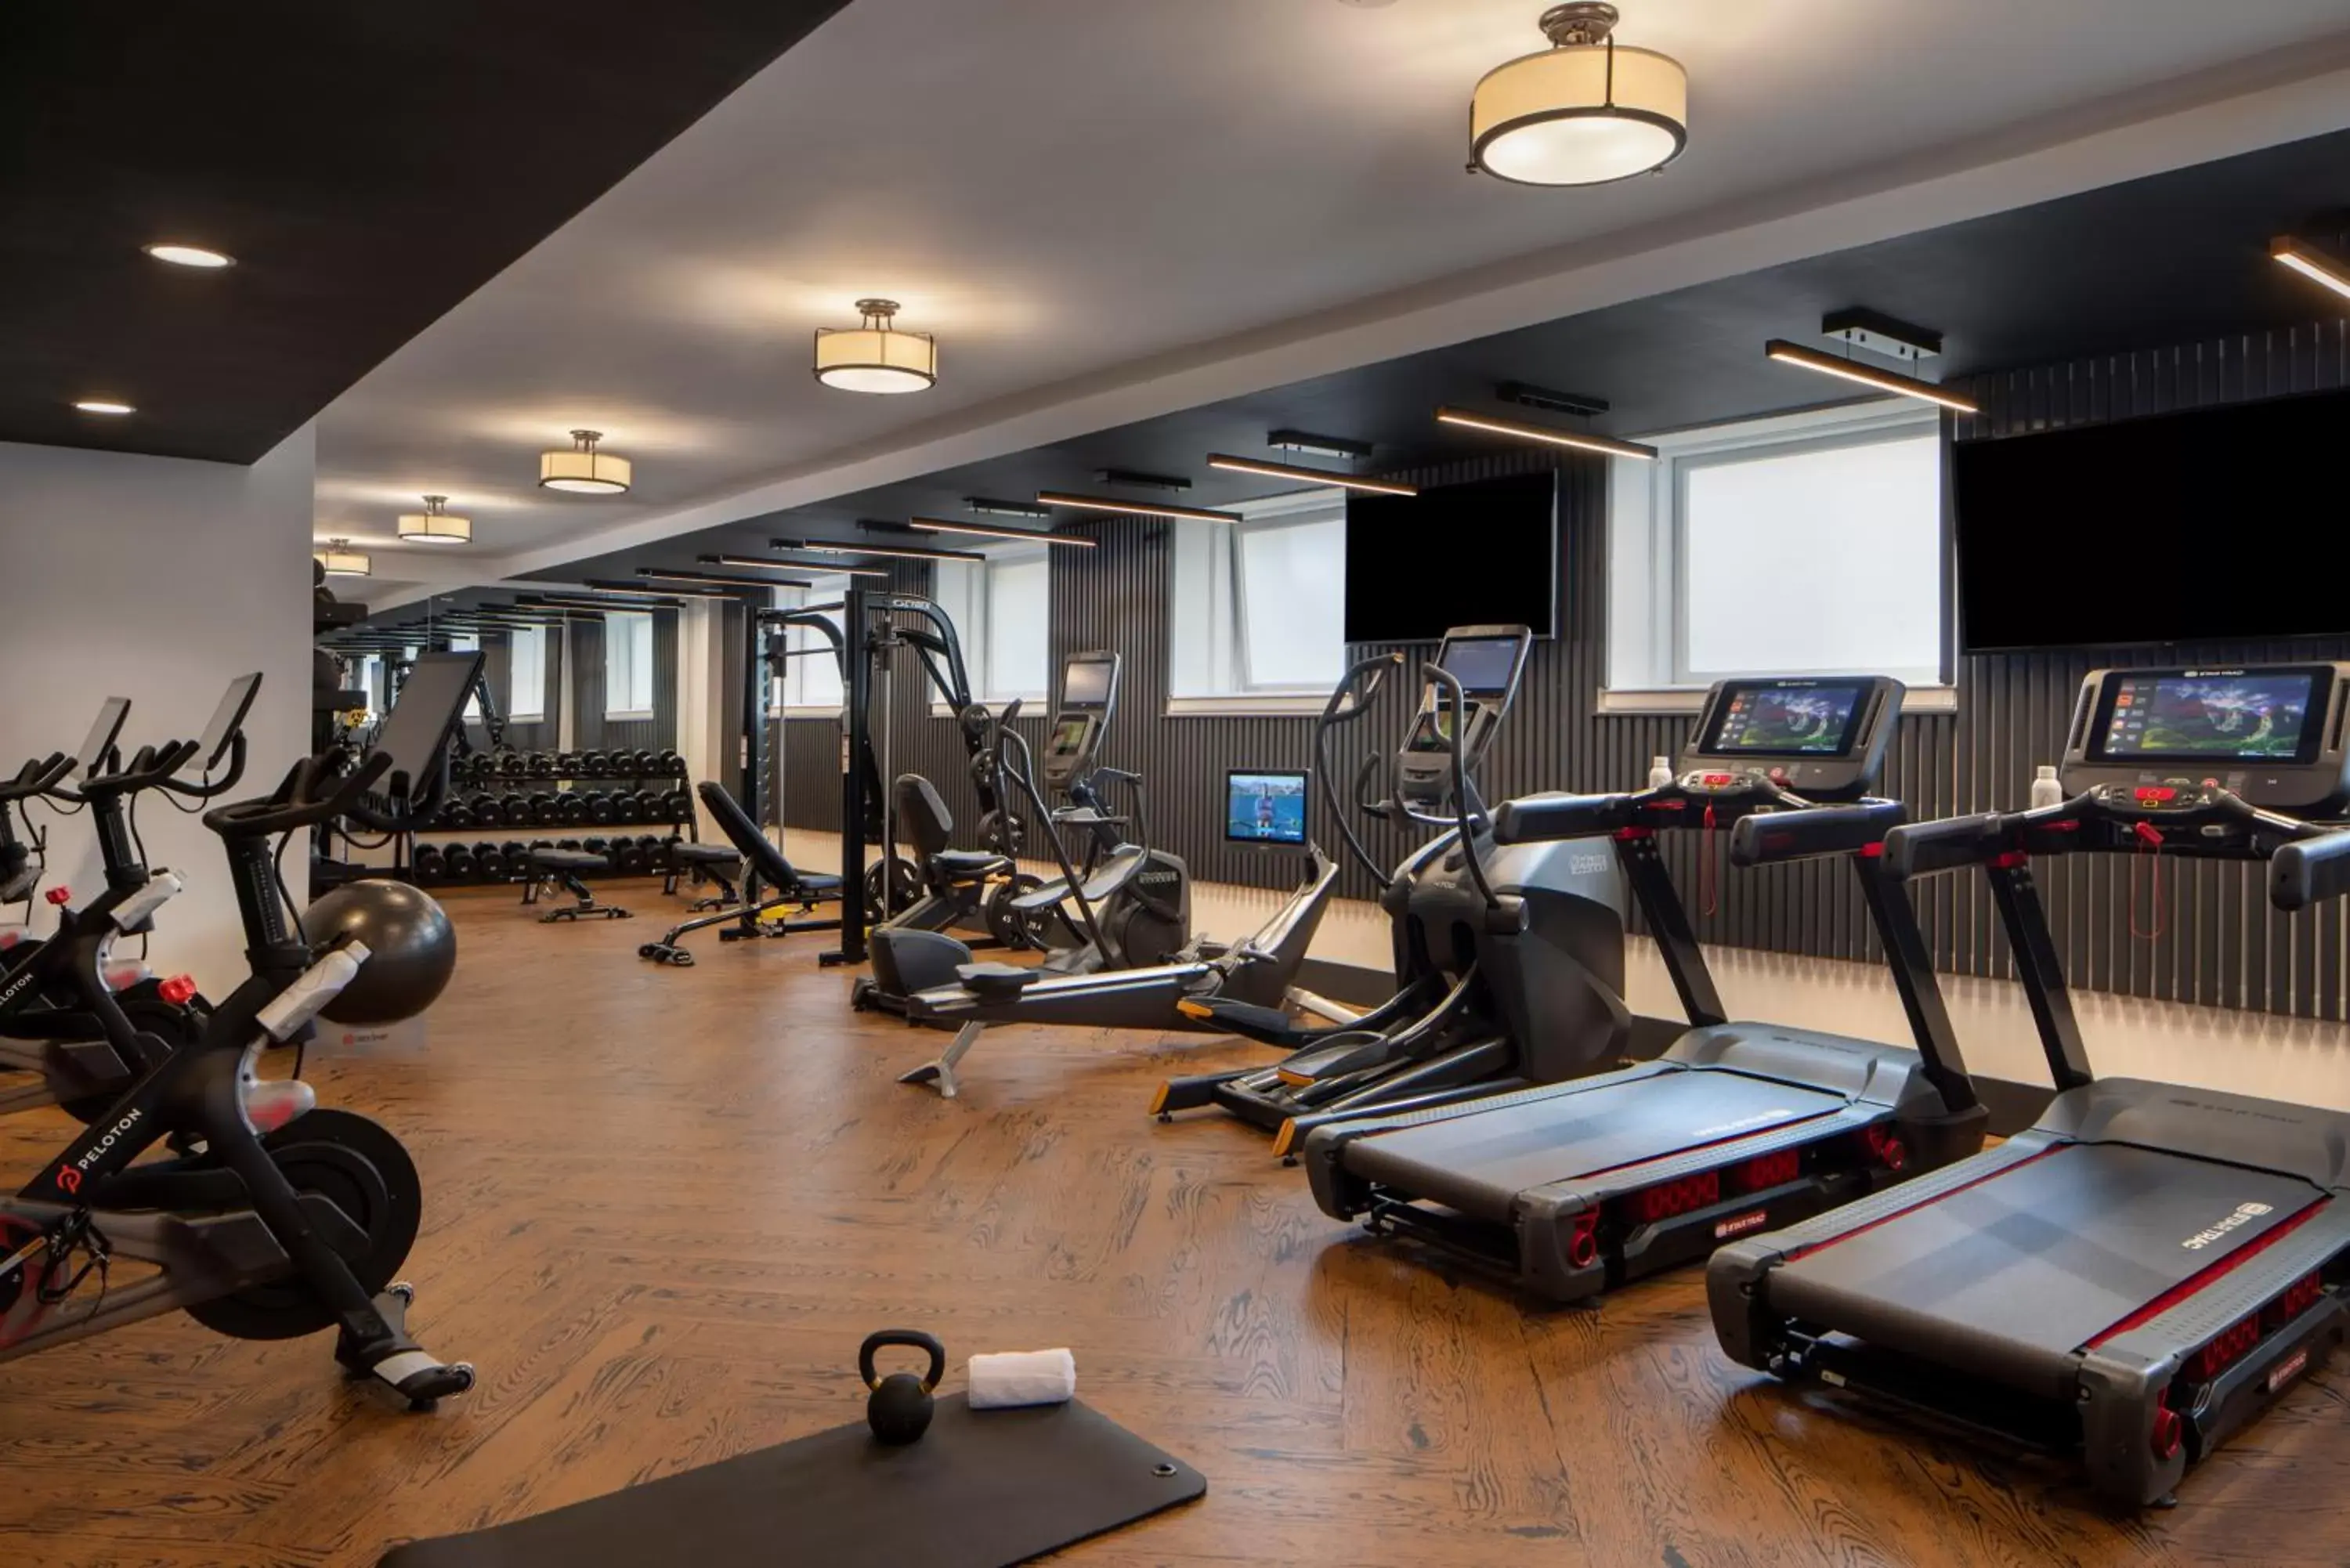 Fitness centre/facilities, Fitness Center/Facilities in Beacon Grand, A Union Square Hotel